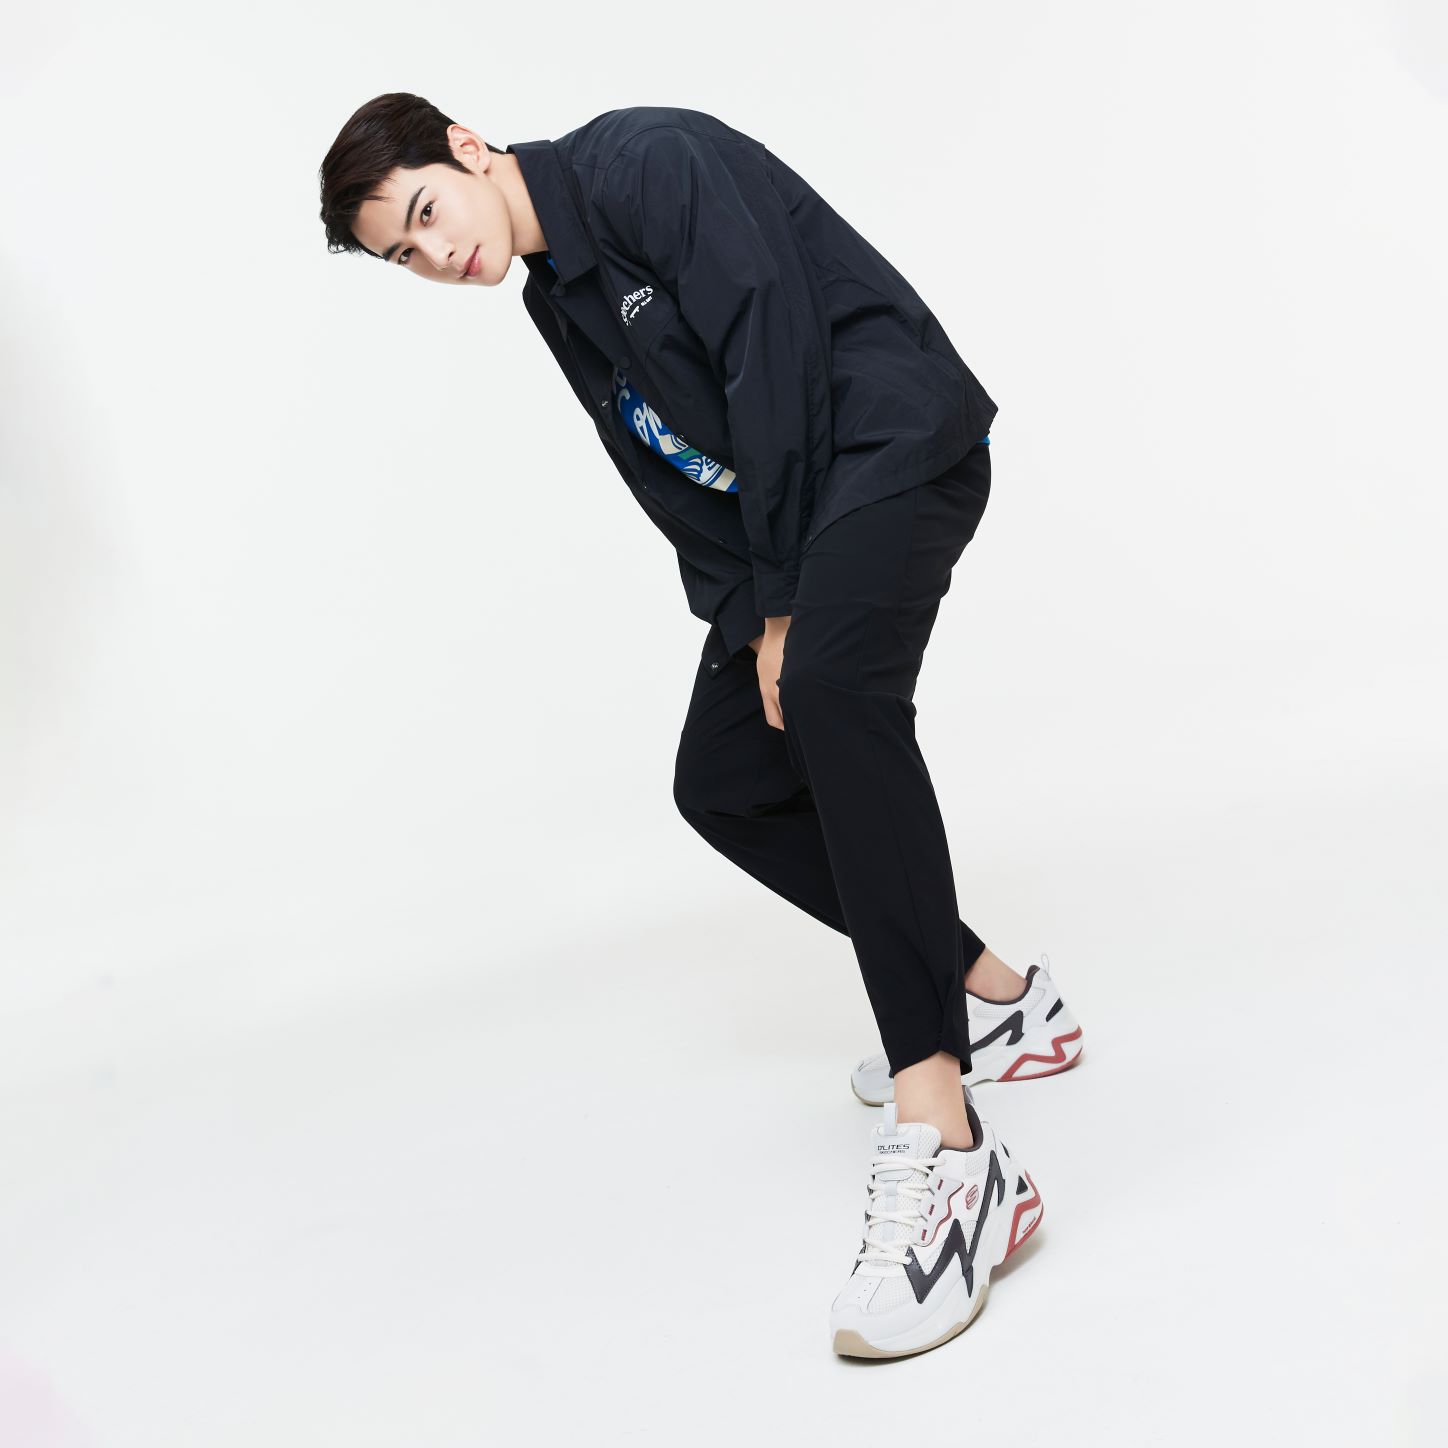 Skechers Woos Top South Korean Pop Idol,Cha Eun-Woo, To Be Its New Regional Brand Ambassador